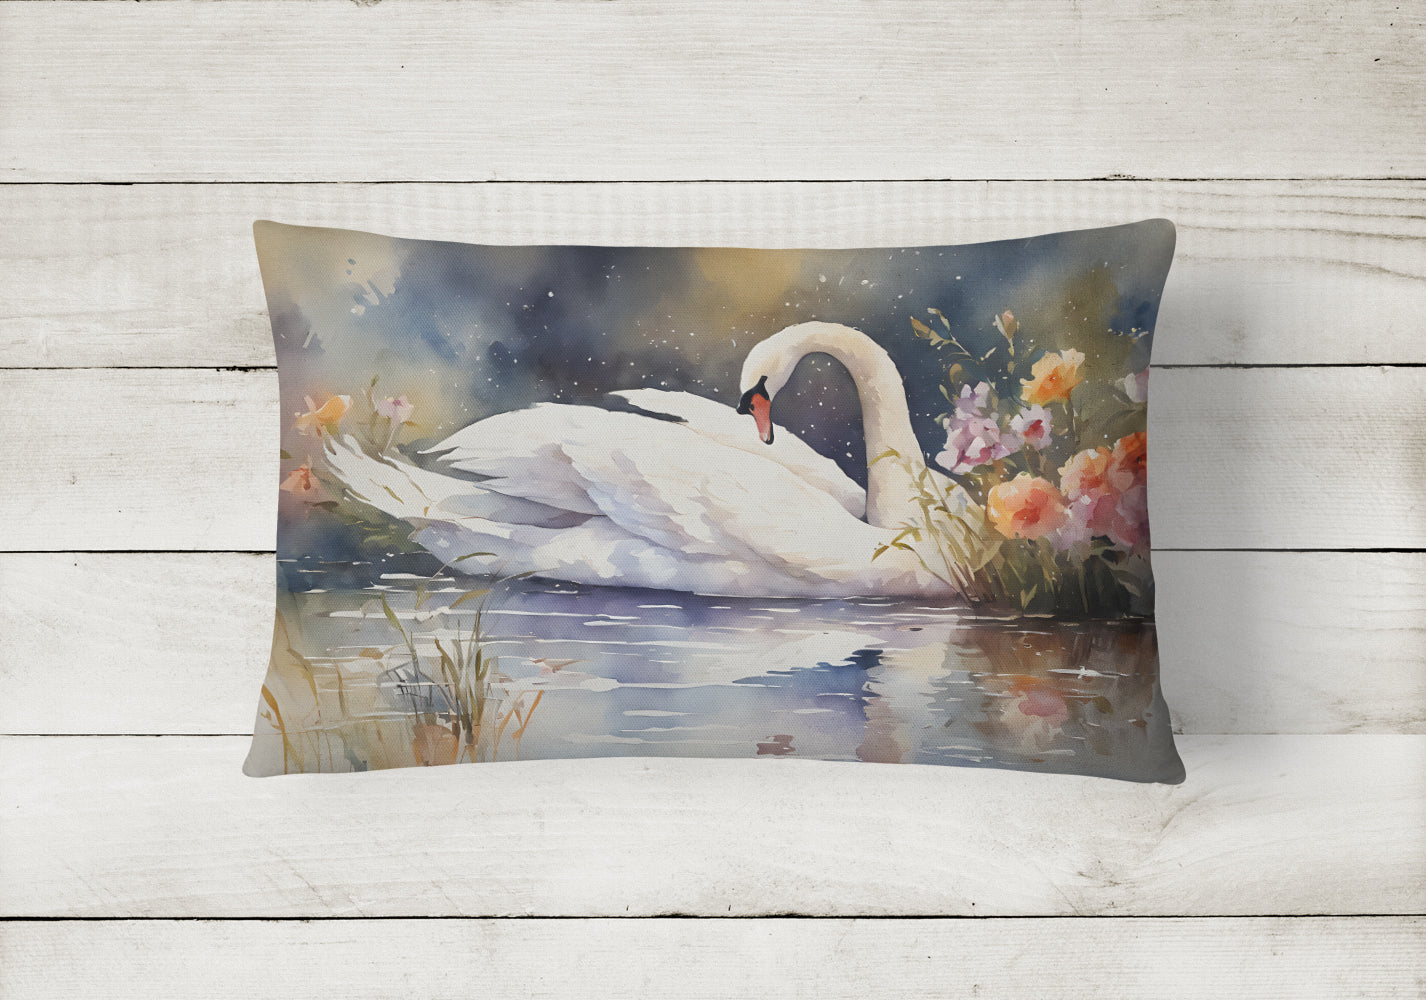 Buy this Swan Throw Pillow